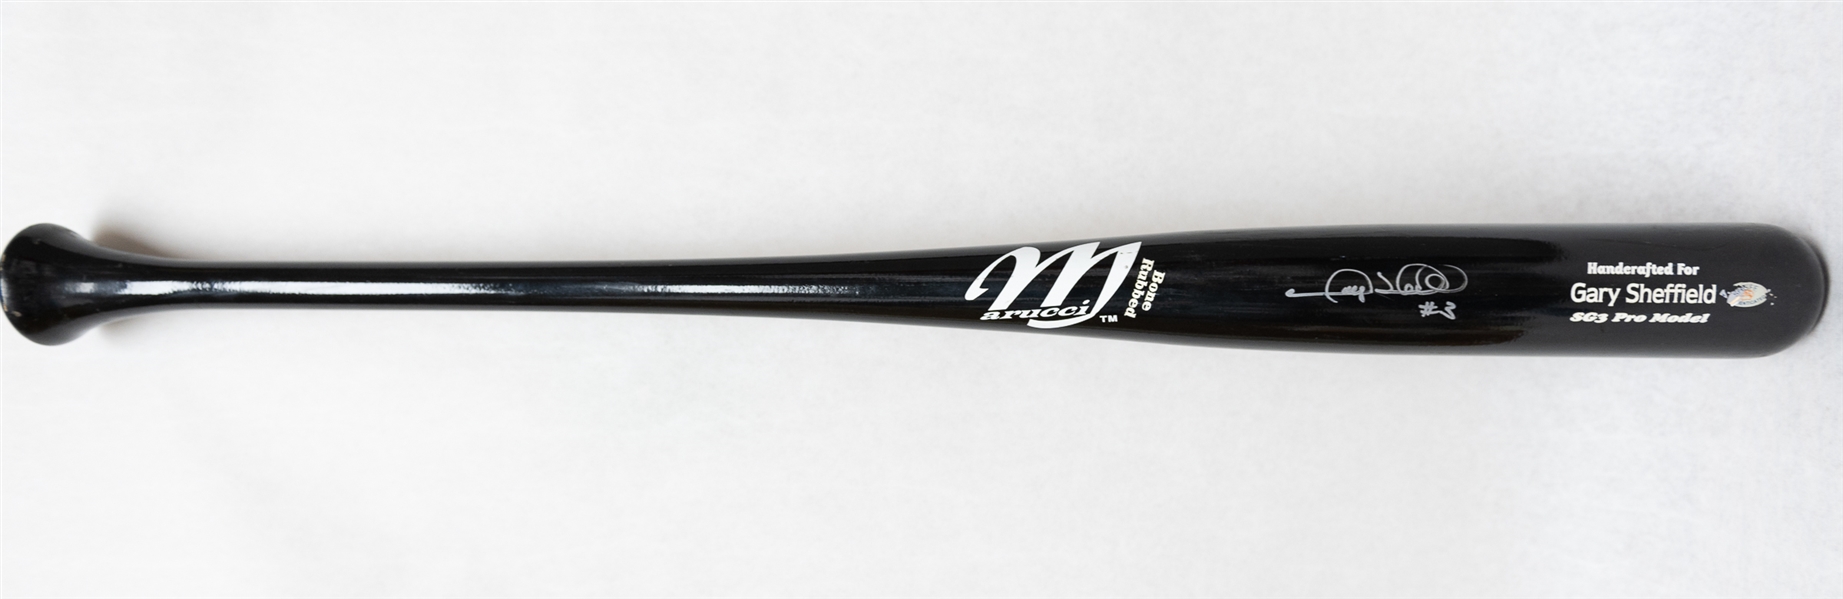 Gary Sheffield Official Marucci SG3 Pro Model Autographed Bat (JSA Cert)